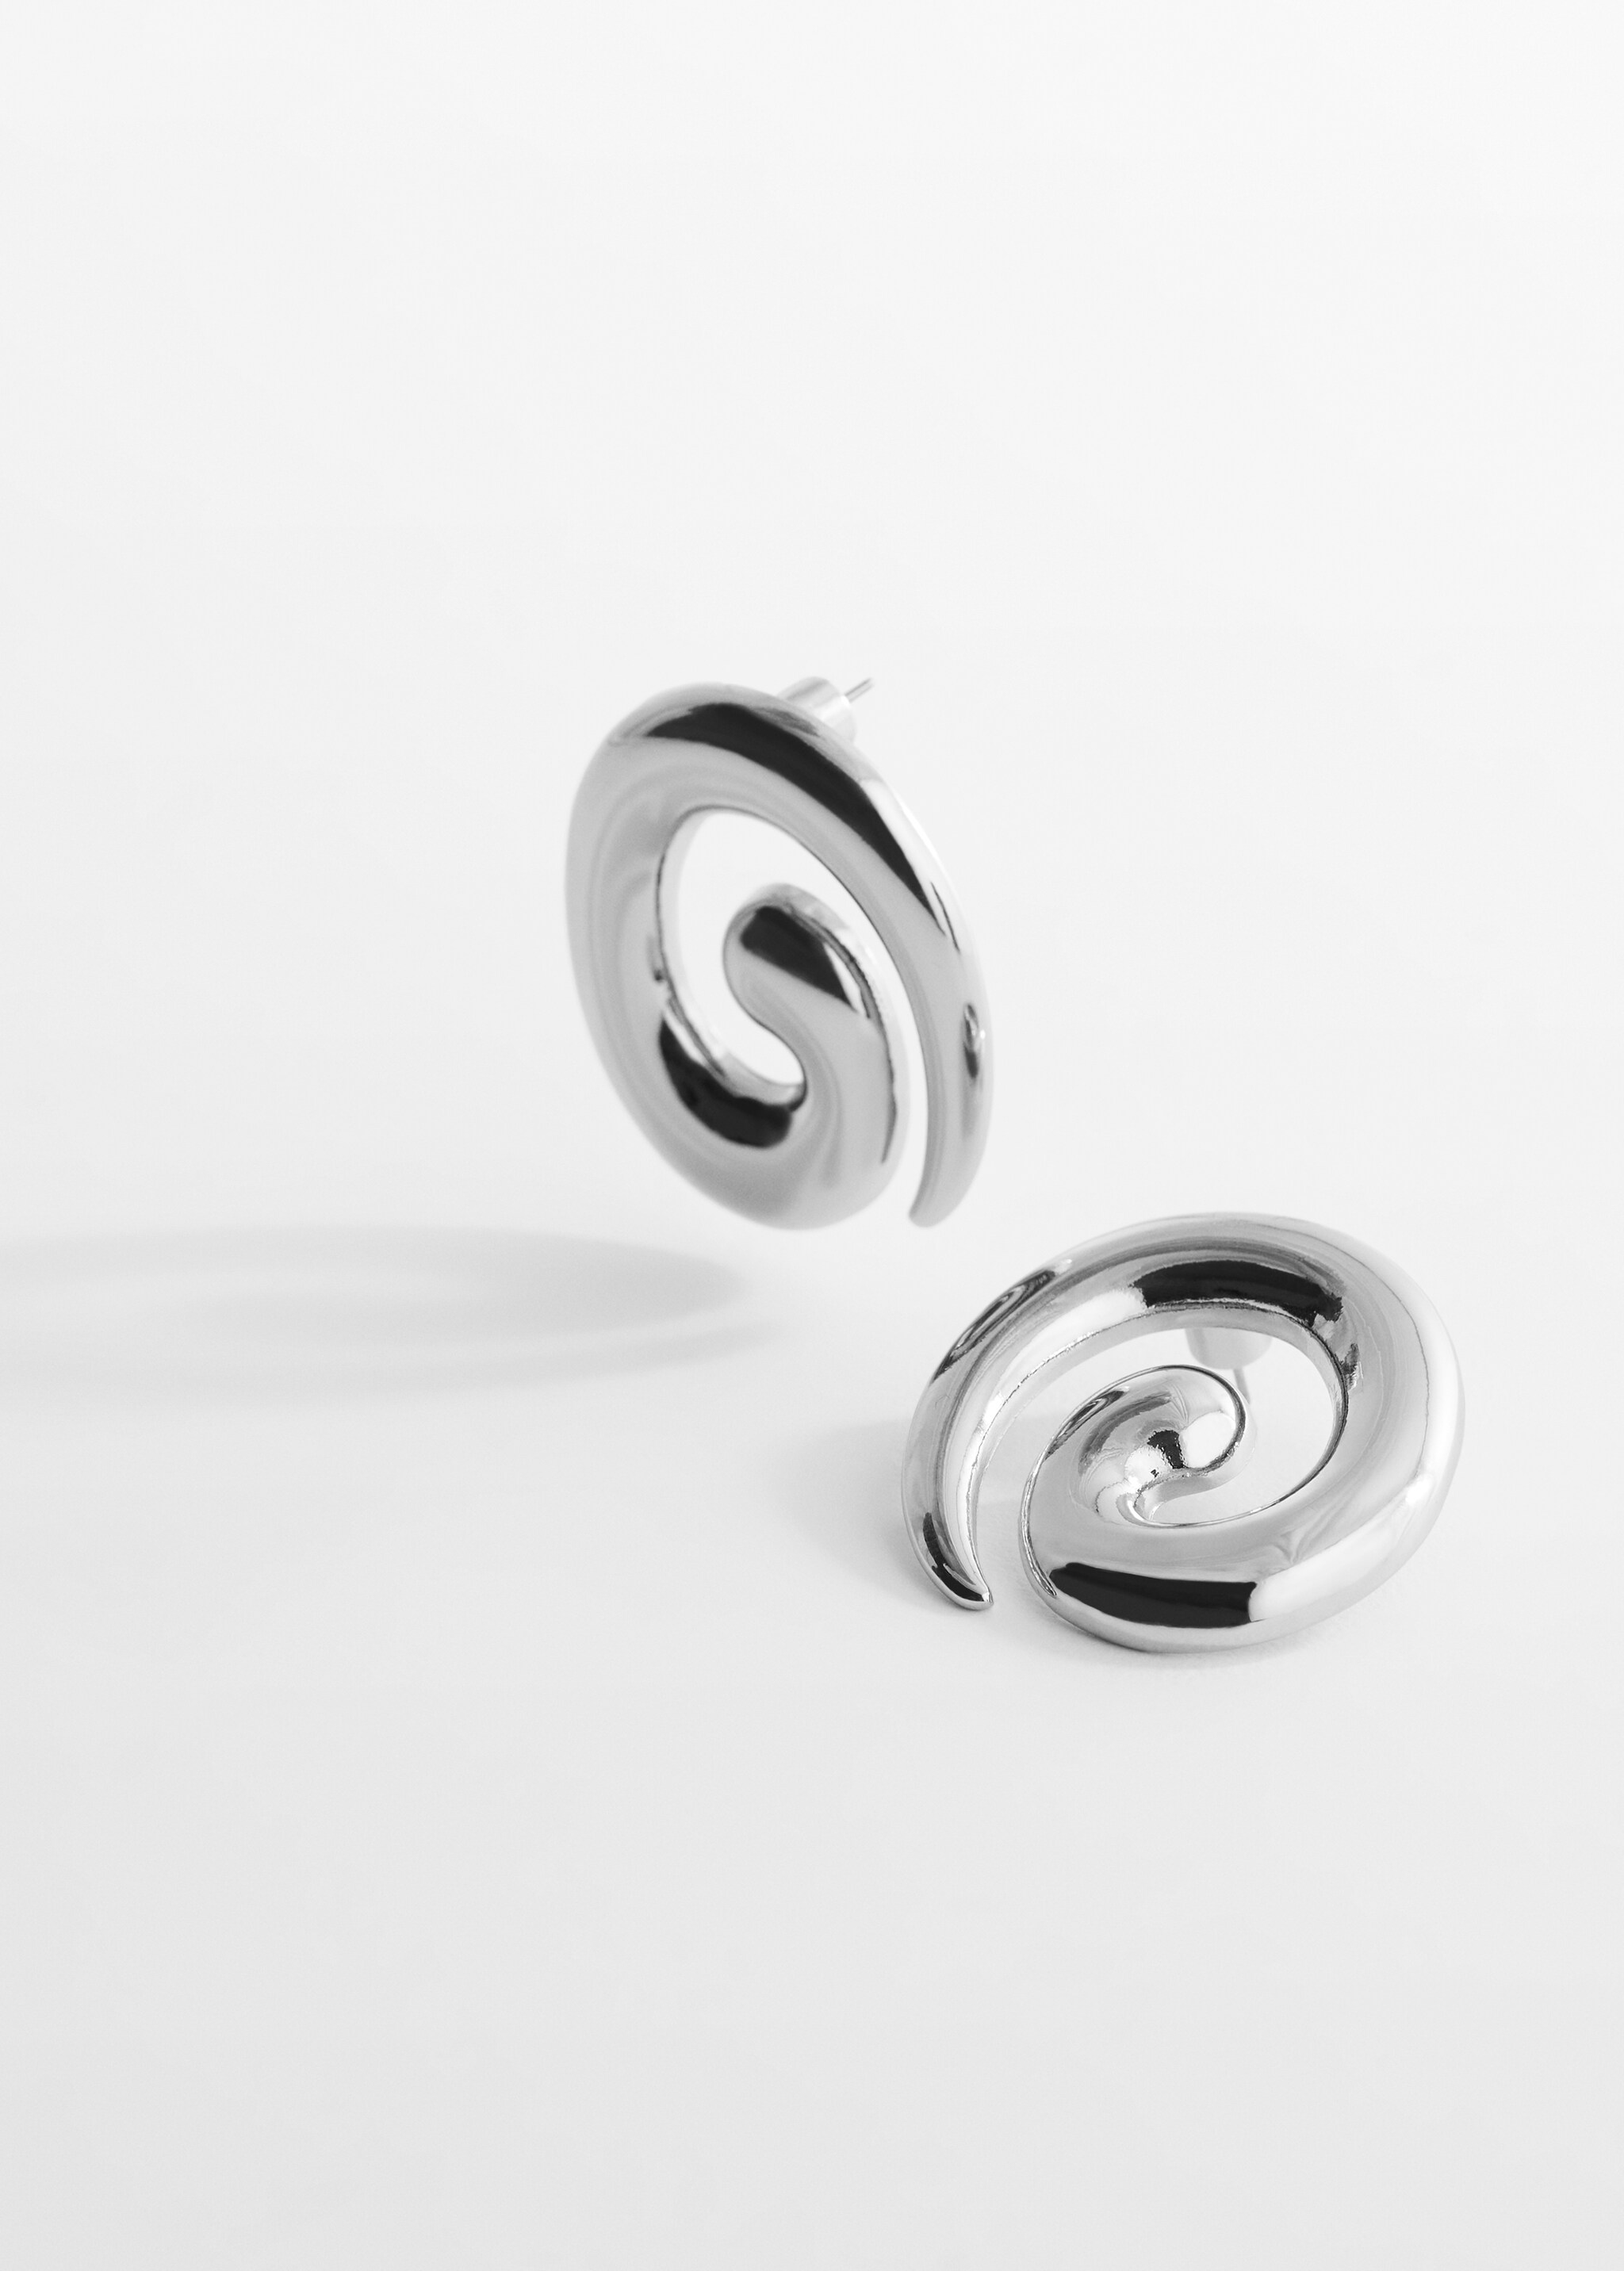 Spiral earrings - Medium plane